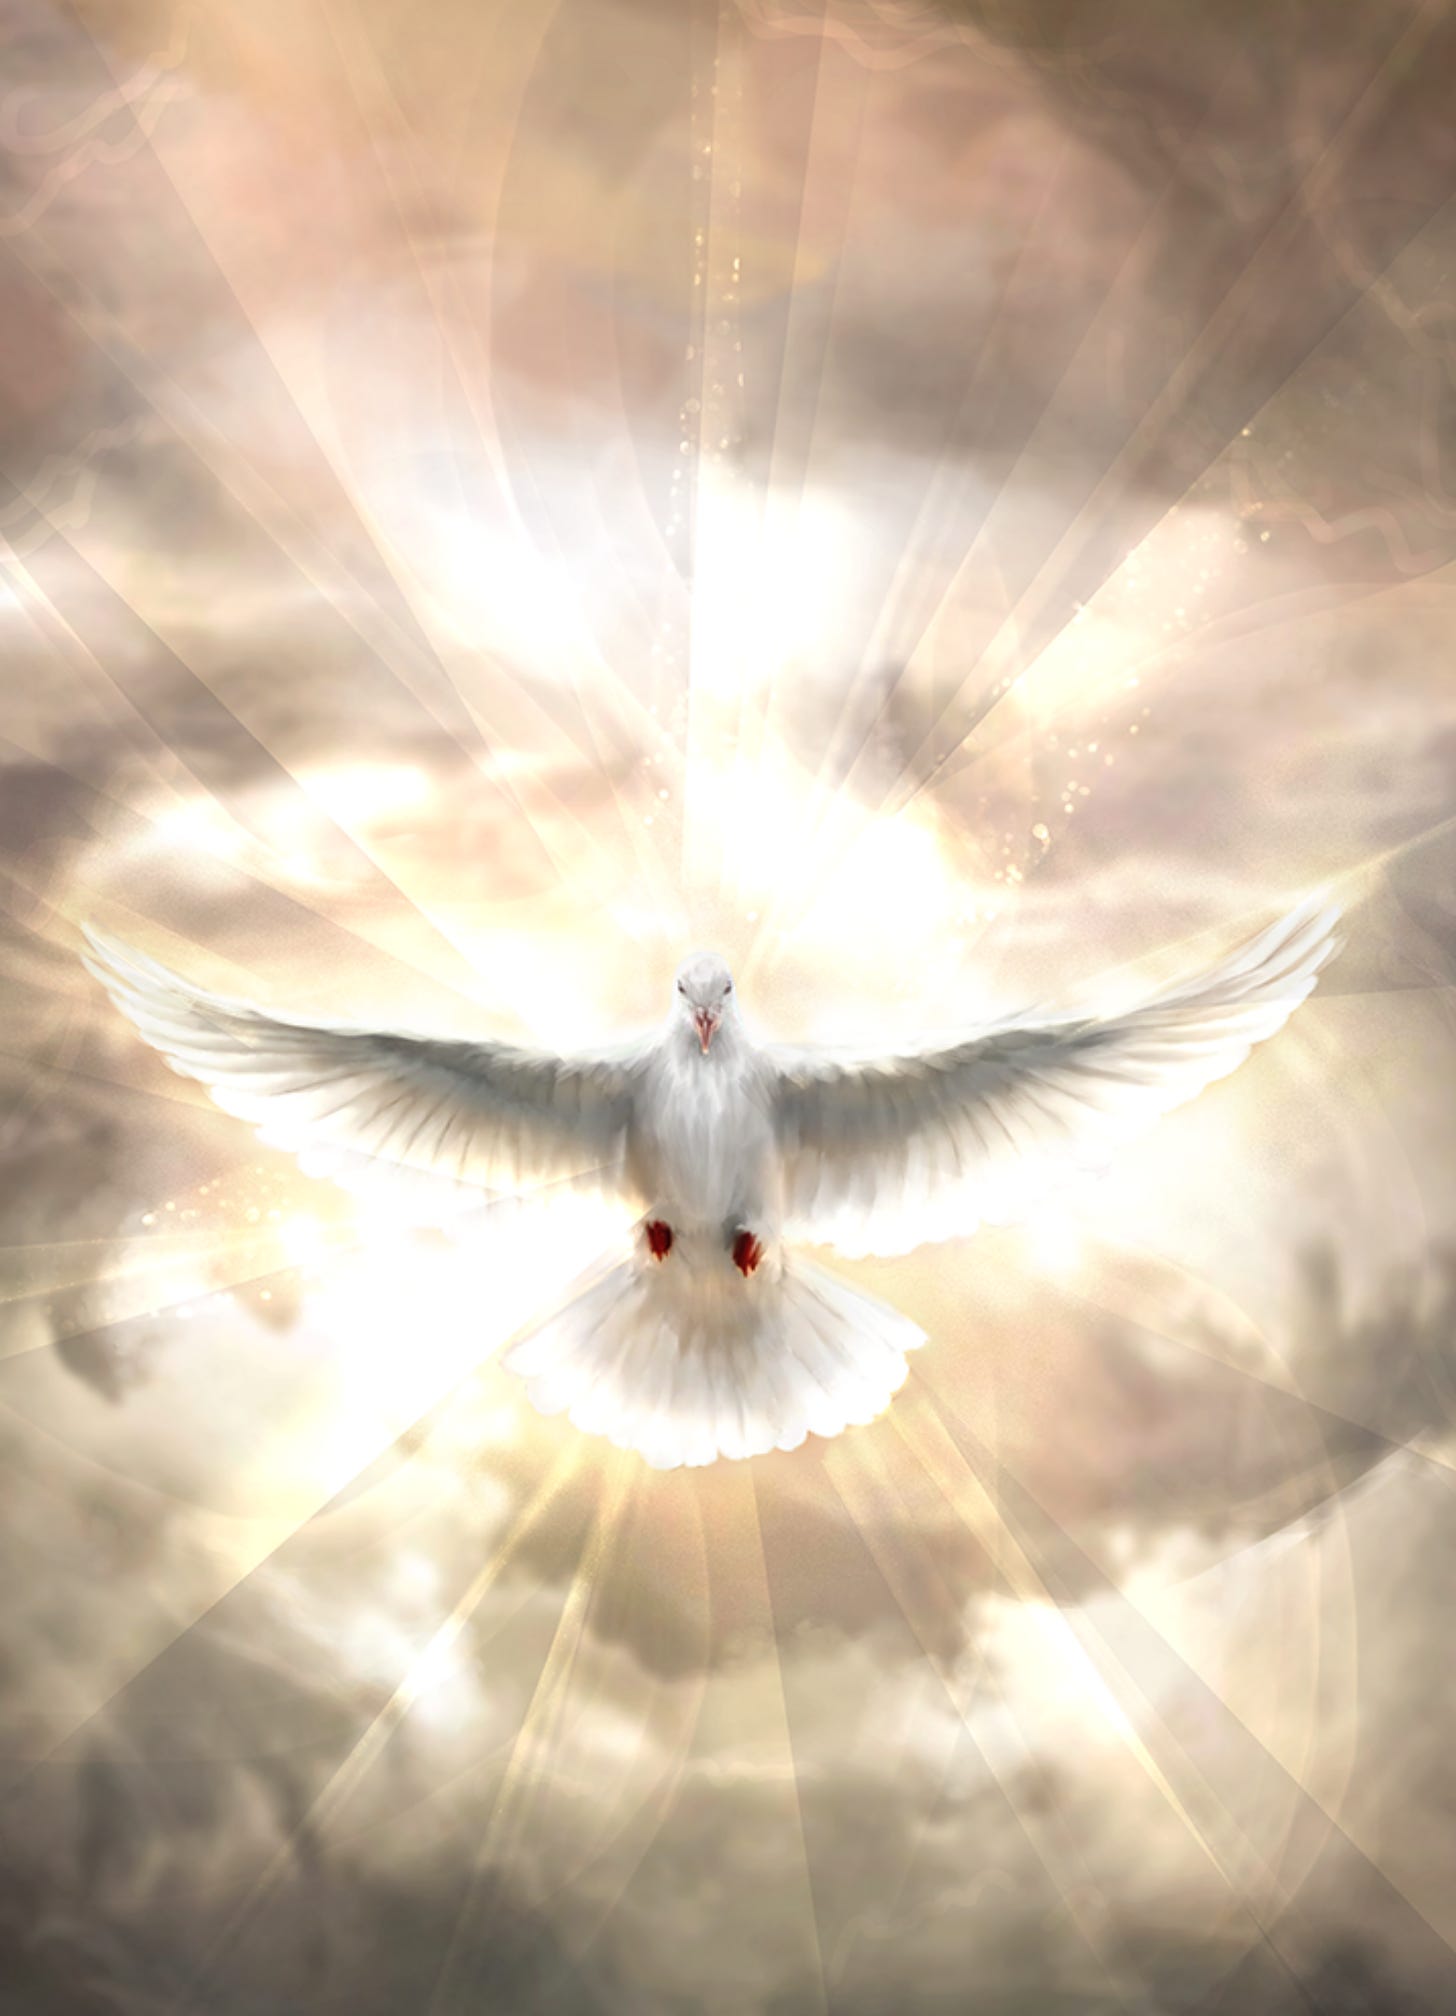 The Holy Spirit; the Spirit of God descending from Heaven like a Dove